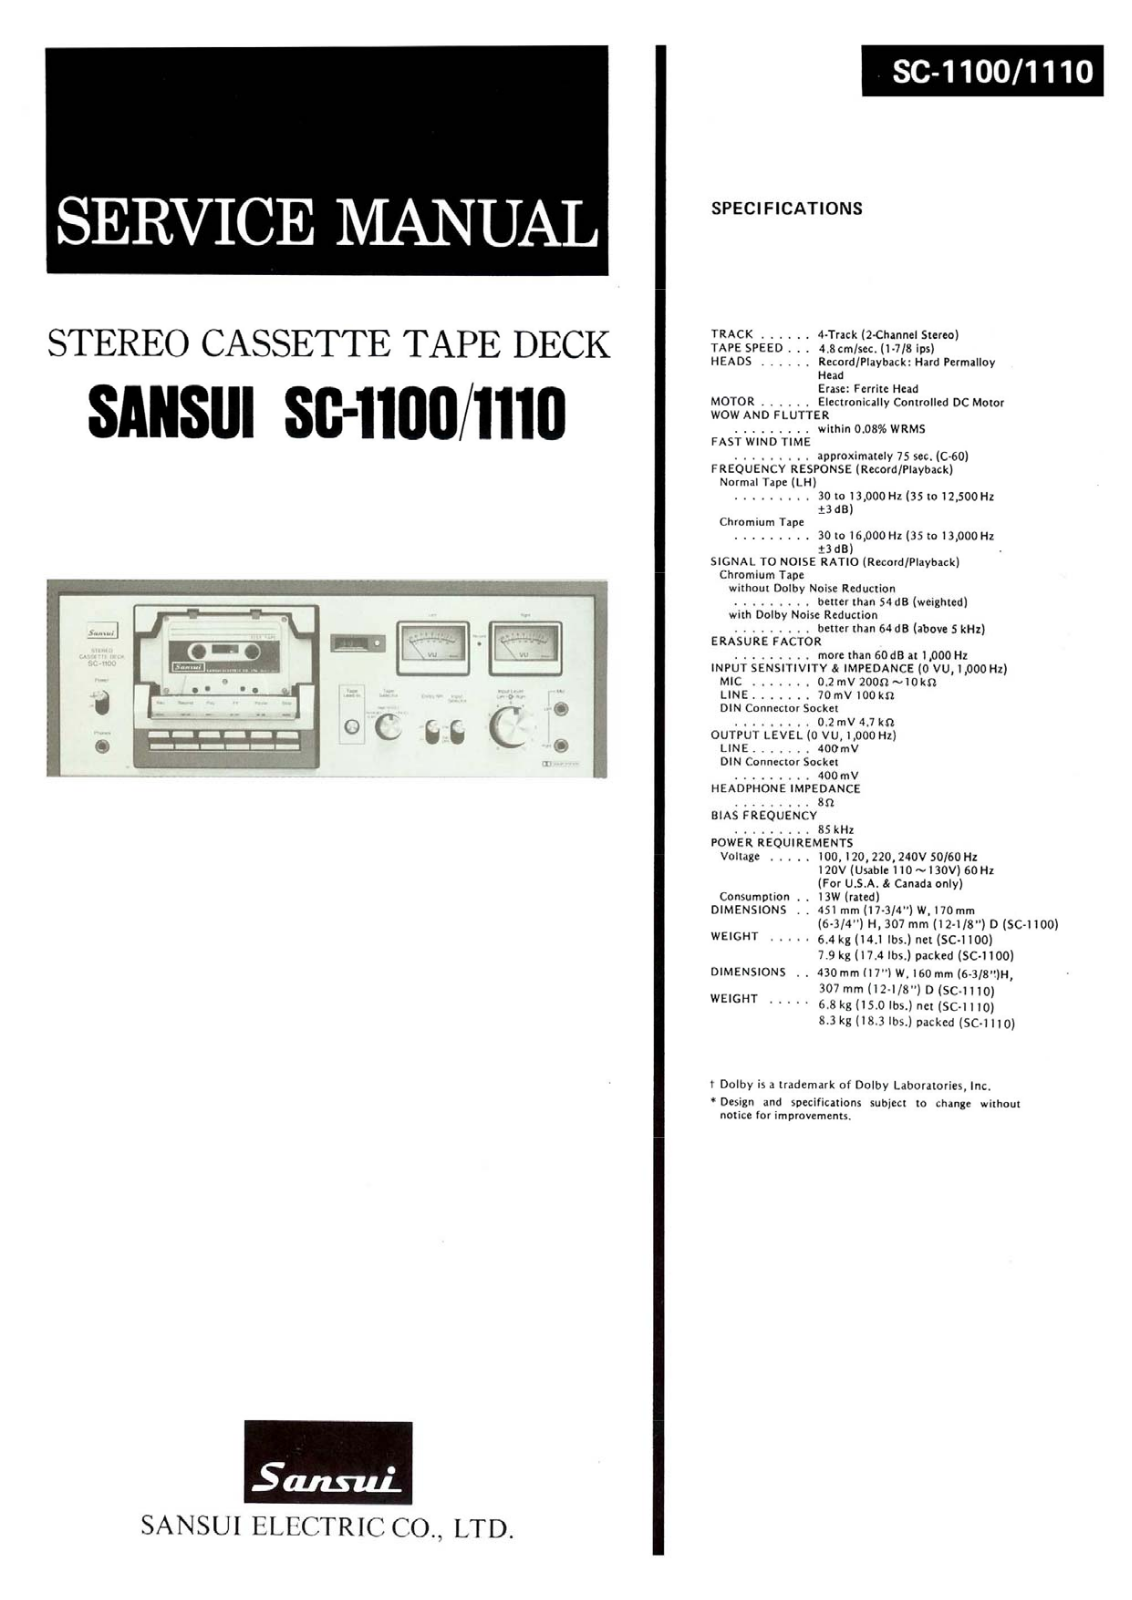 Sansui SC-1110, SC-1100 Service Manual